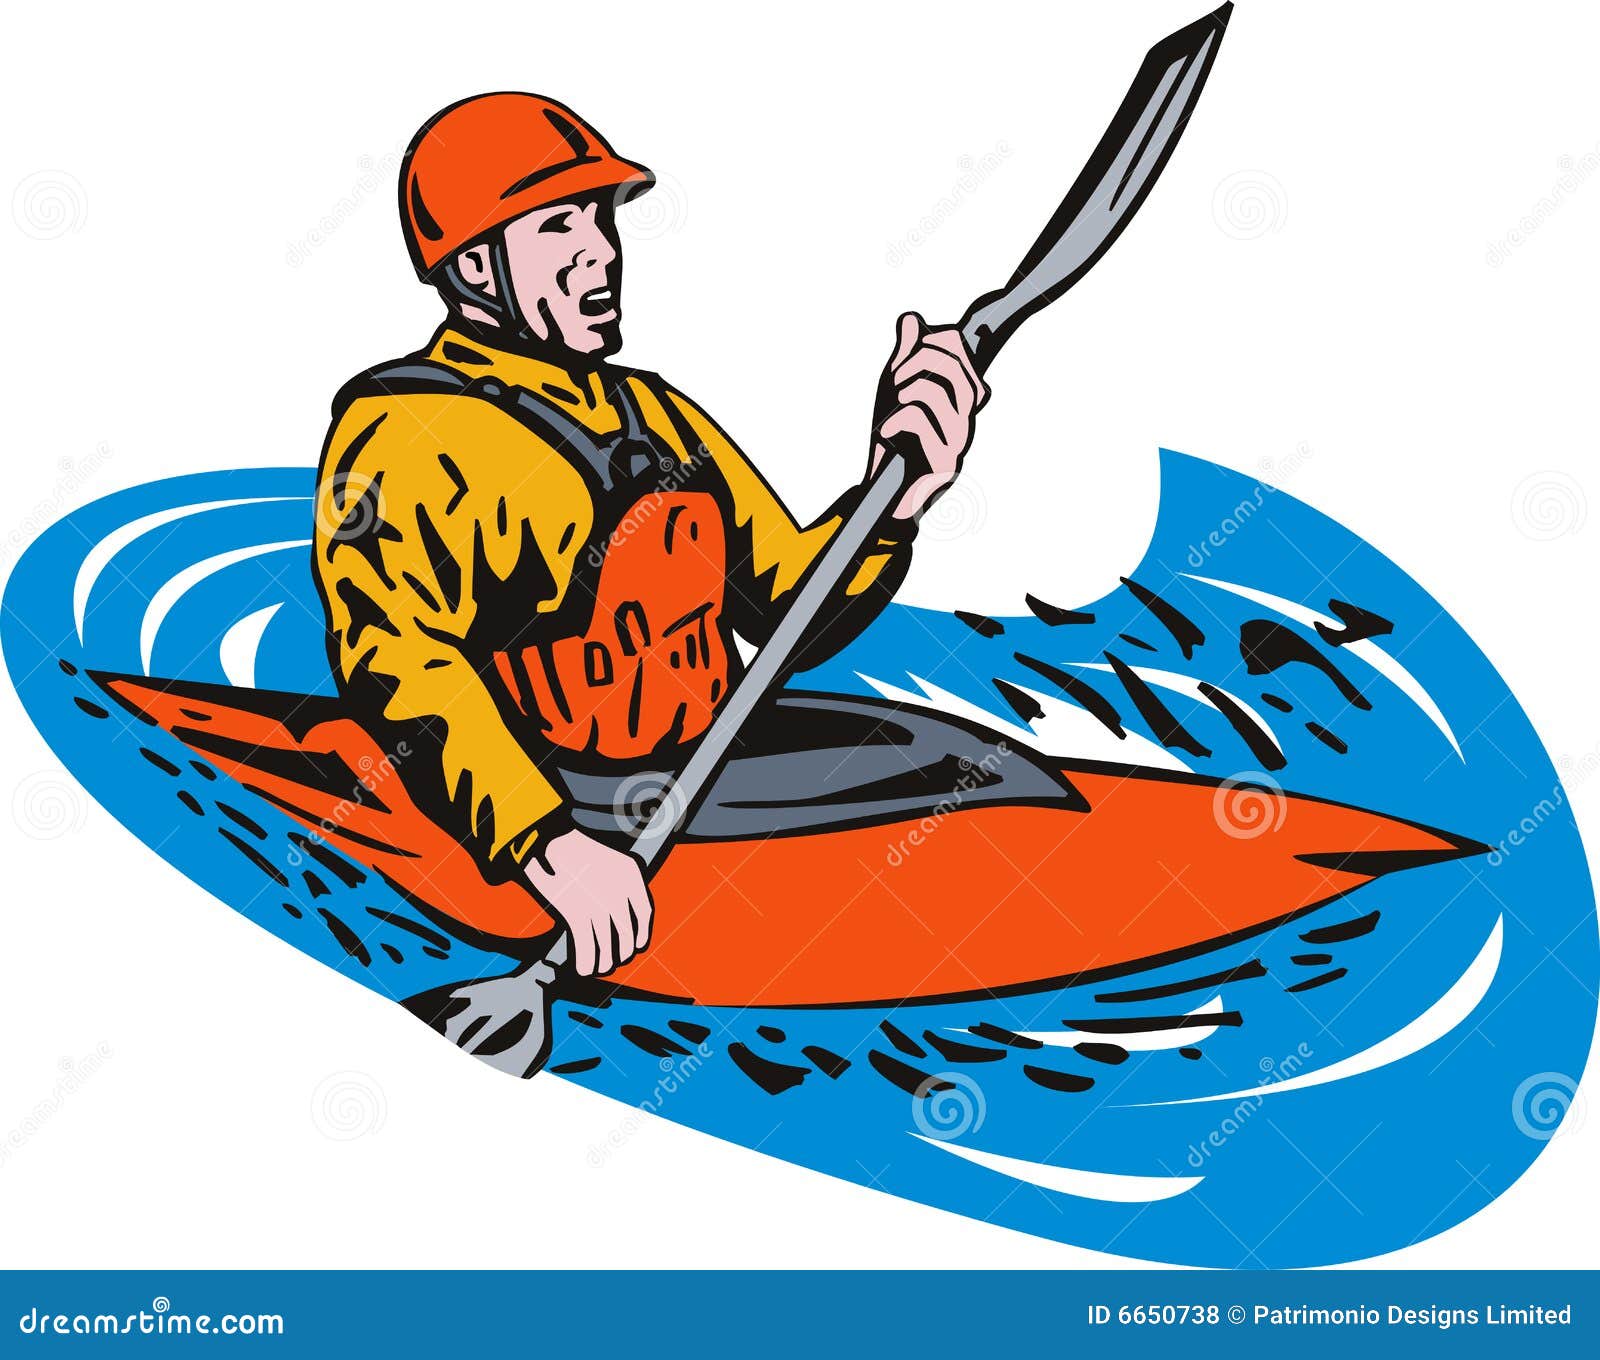 clipart canoe kayak - photo #39